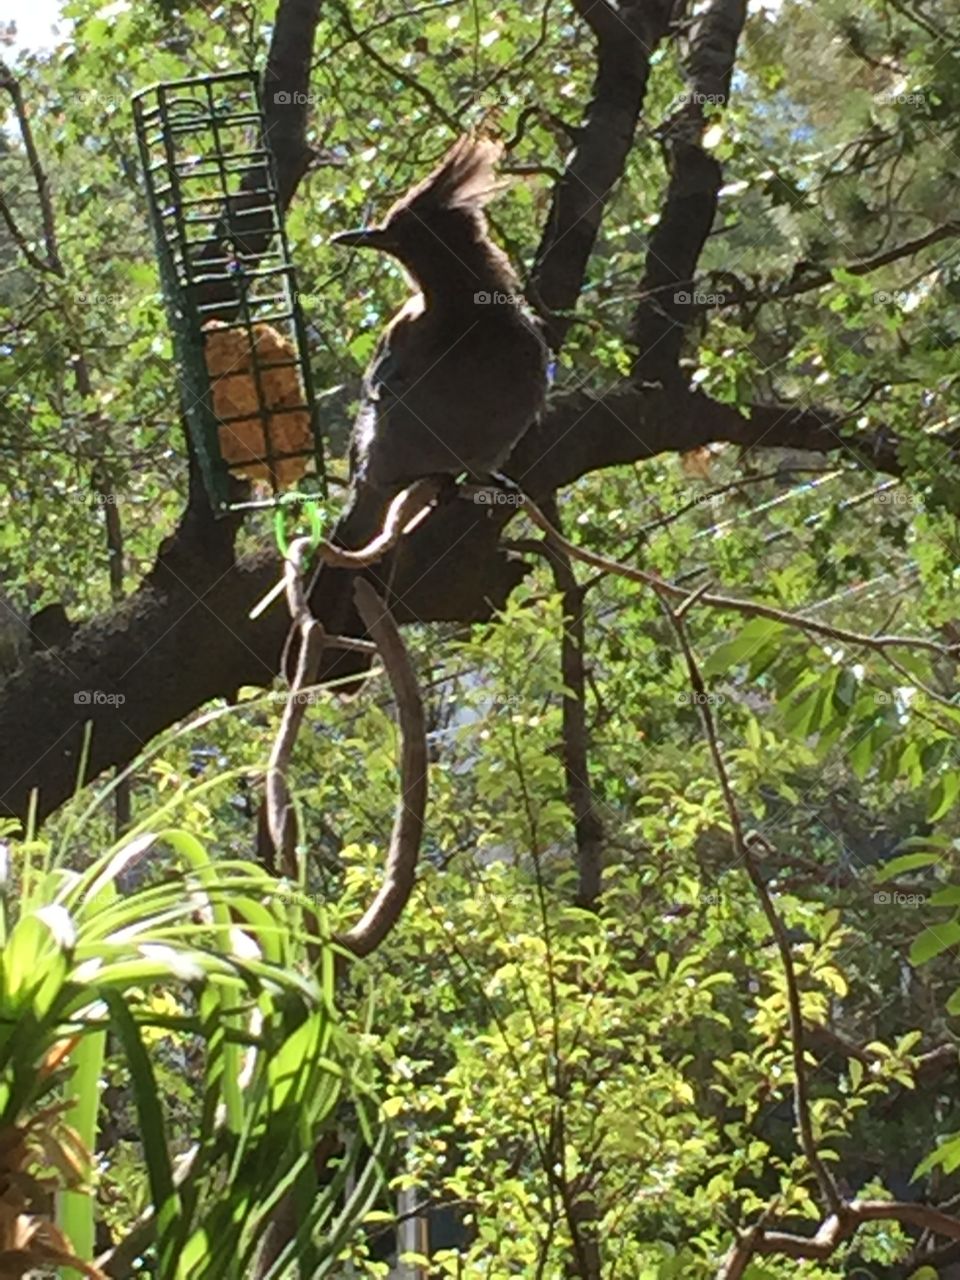 stellar Jay in profile. bird in a tree, bird with suet